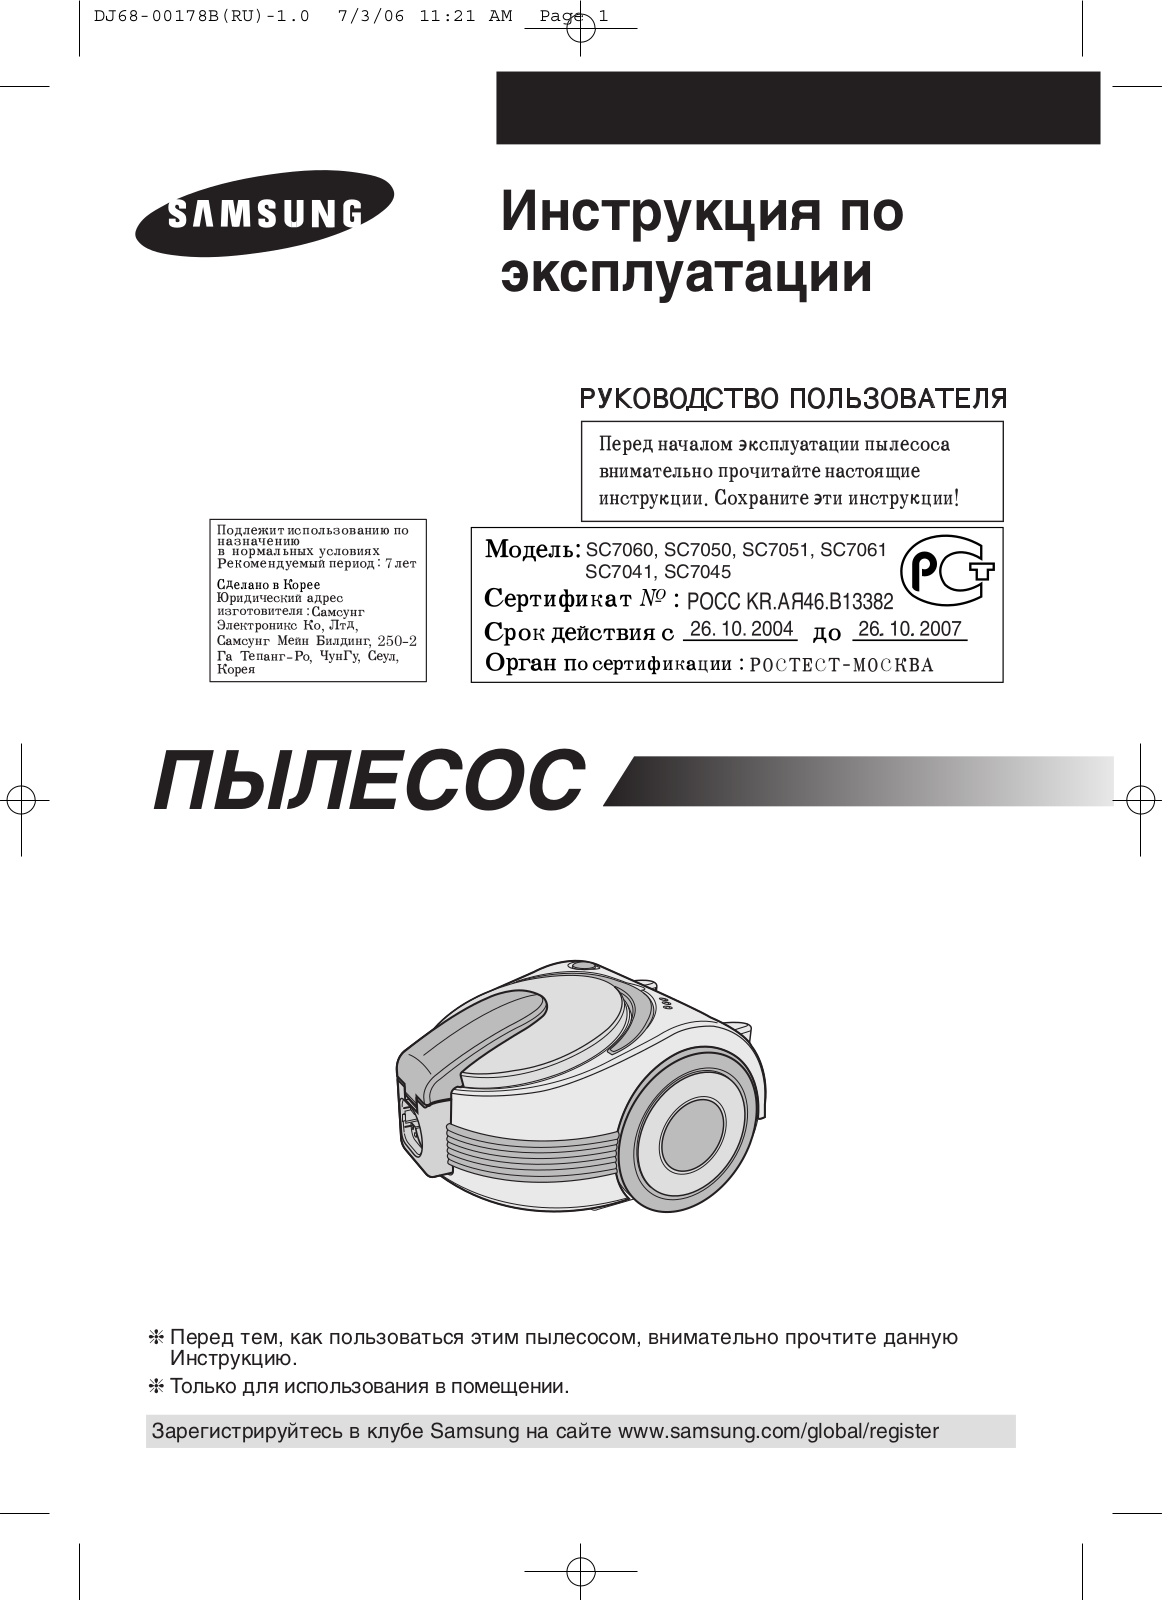 Samsung SC7045 User Manual